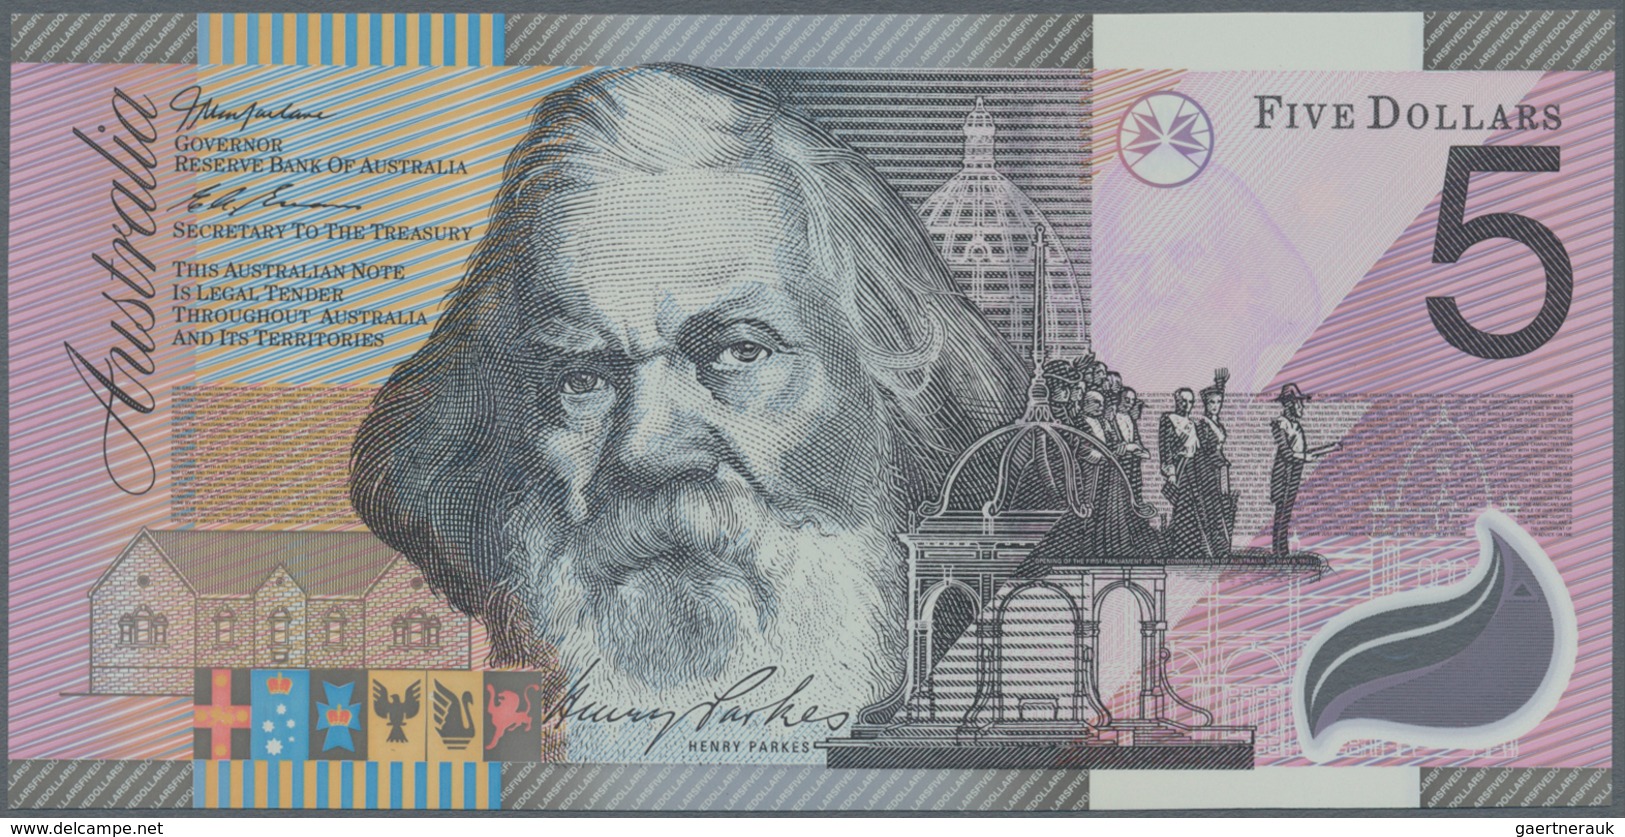 Australia / Australien: set of 25 banknotes containing 1 Pound portrait QEII P. 30, 2x 1 Dollar P. 3